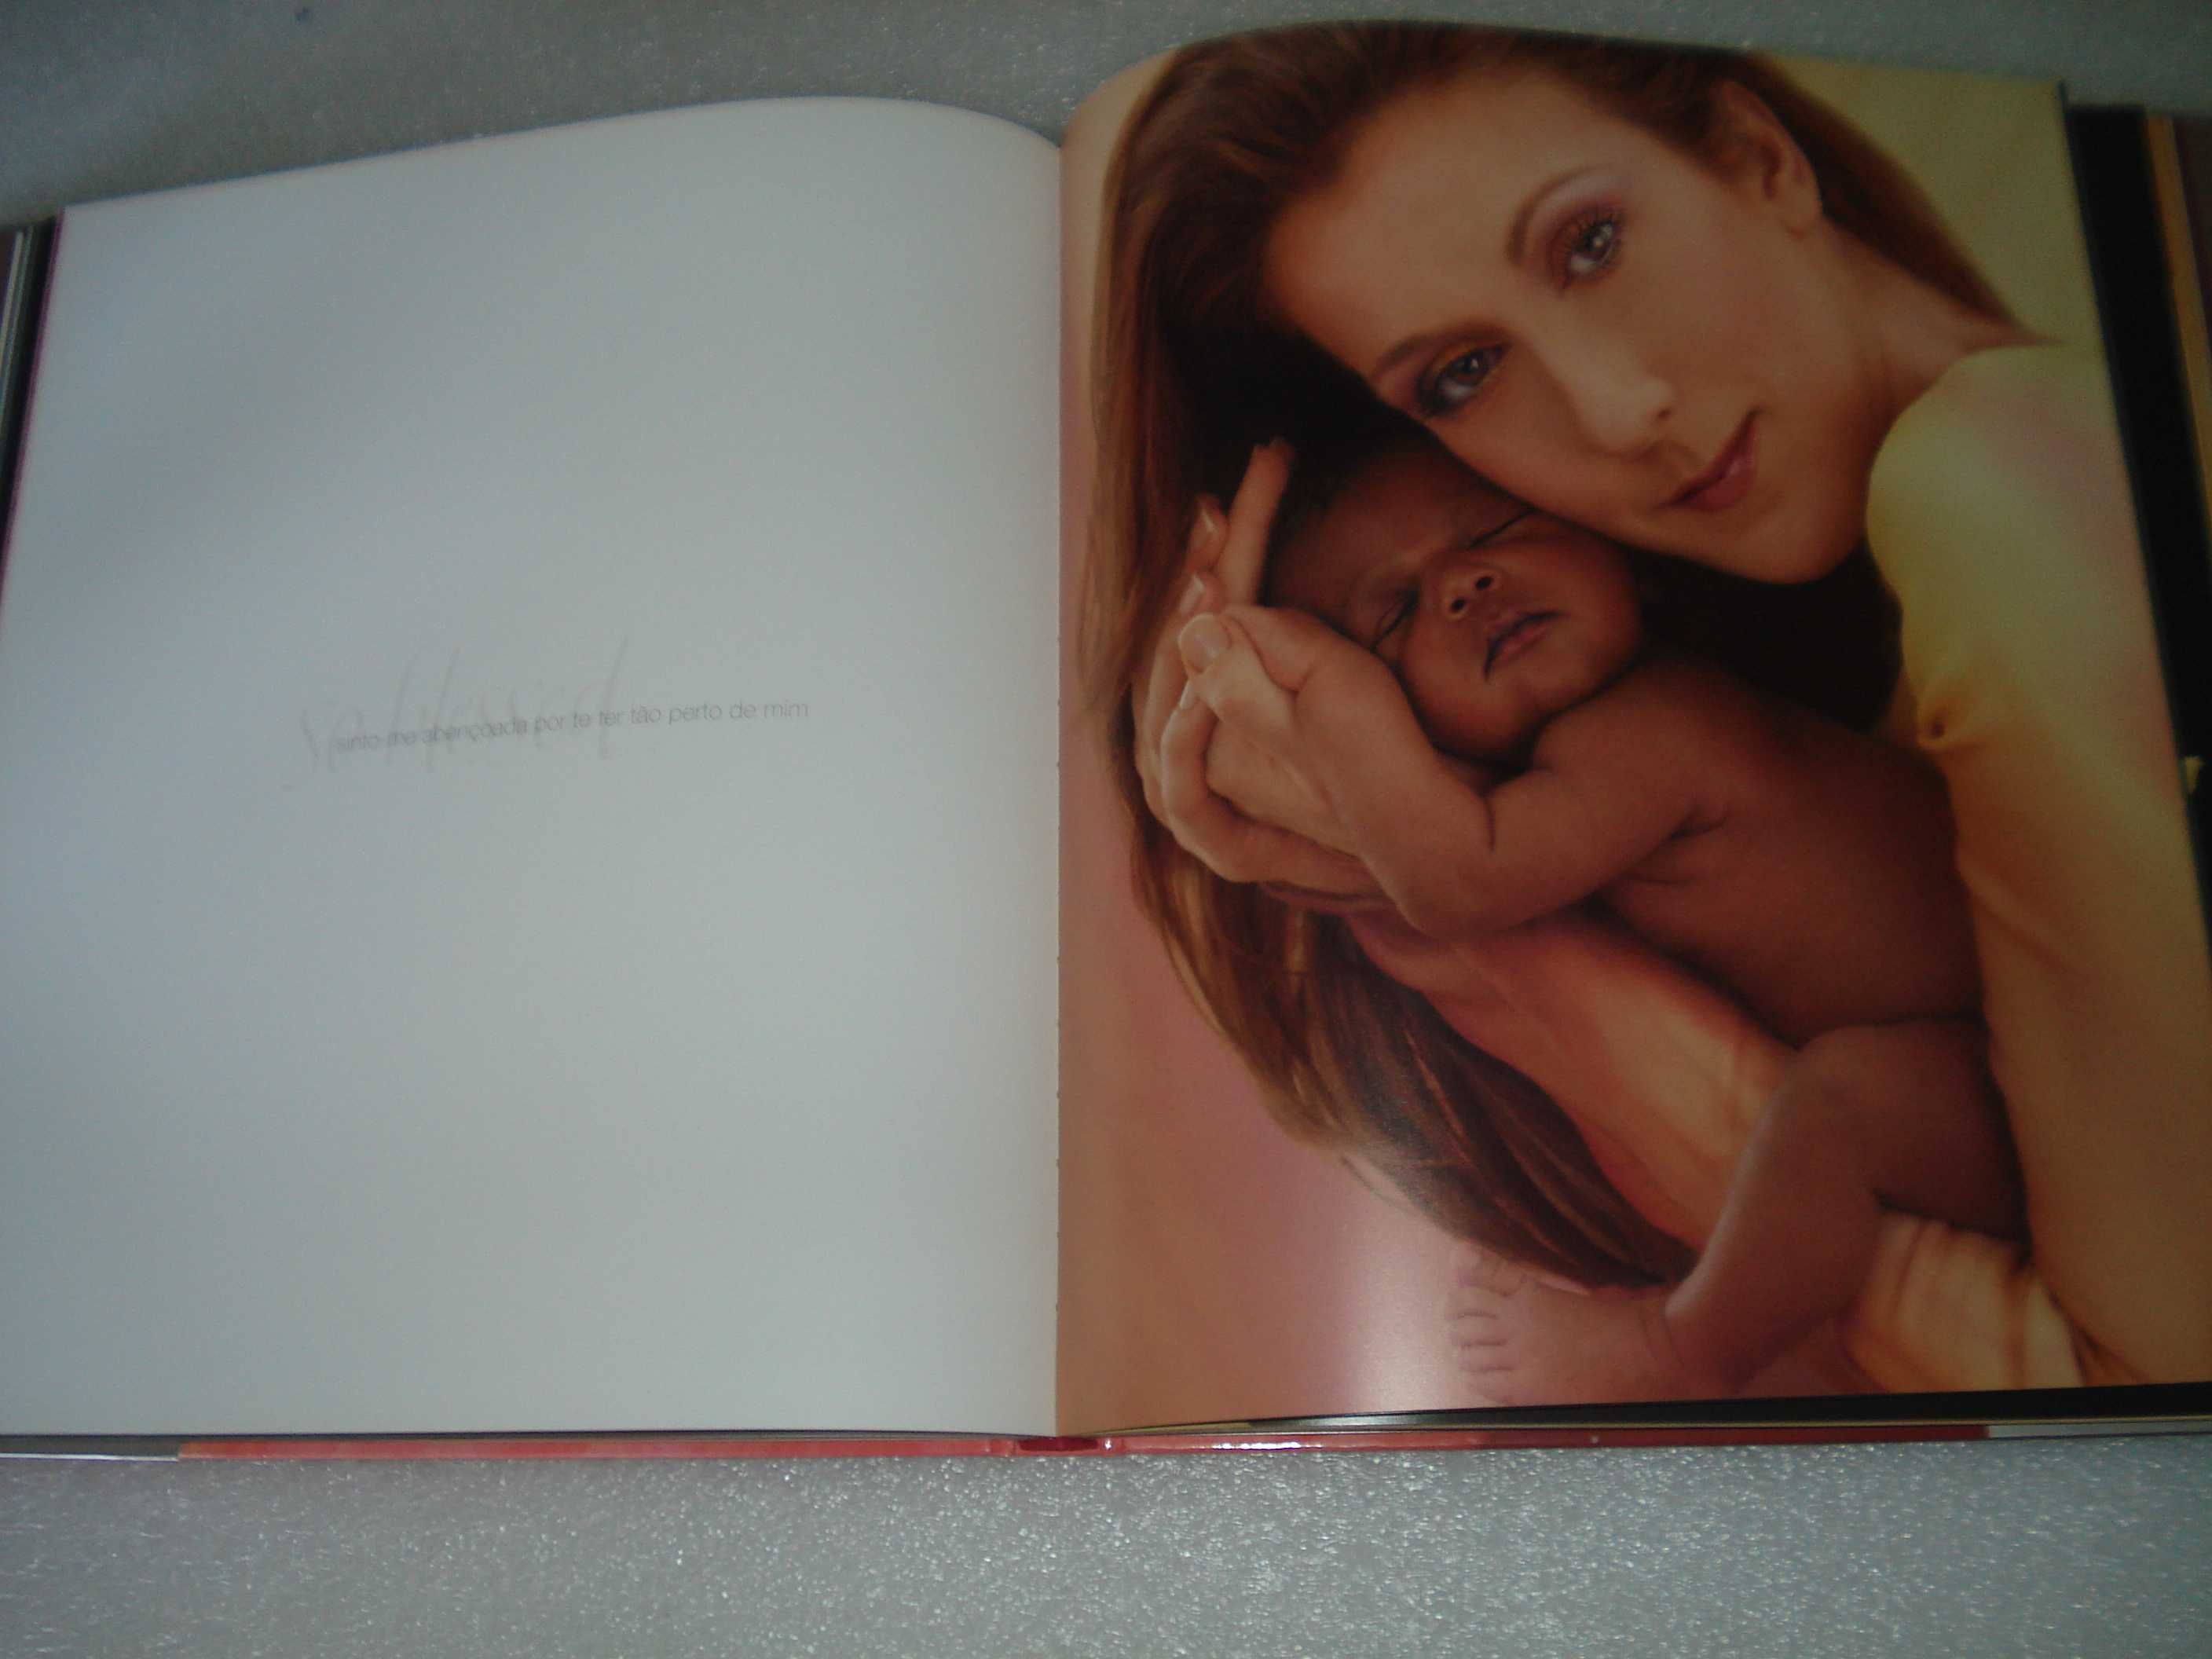 Raro livro de grandes dimensões de Celine Dion - Milagre -2004